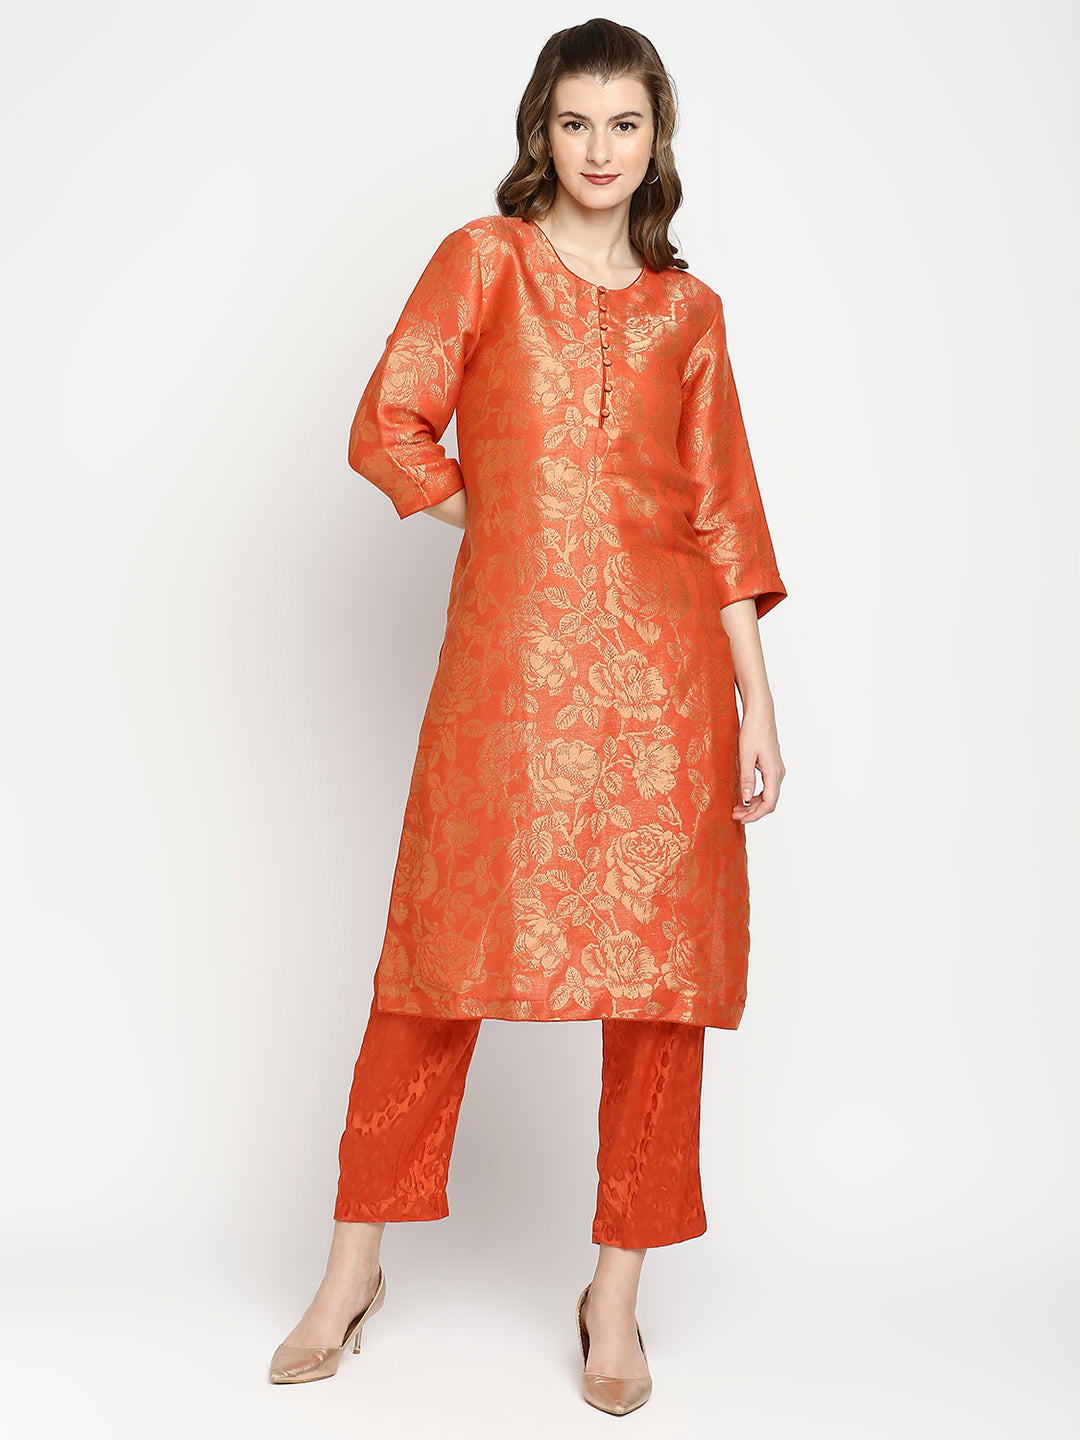 Buy CLOTH HAUS INDIA Orange Rose & Petal Design Brocade Kurti at Amazon.in